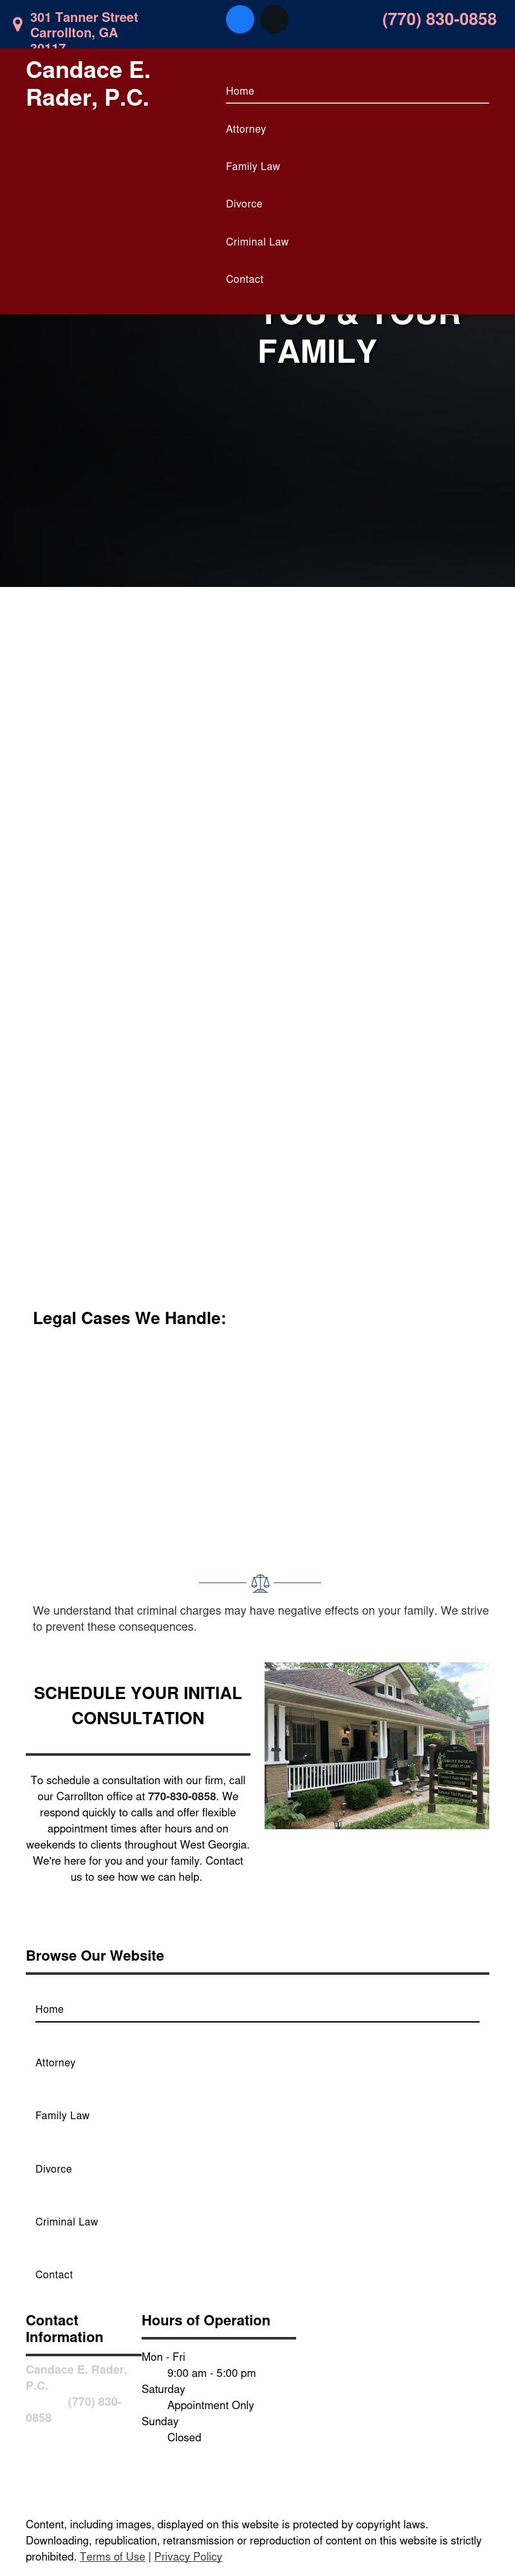 Candace E. Rader, P.C. - Carrollton GA Lawyers